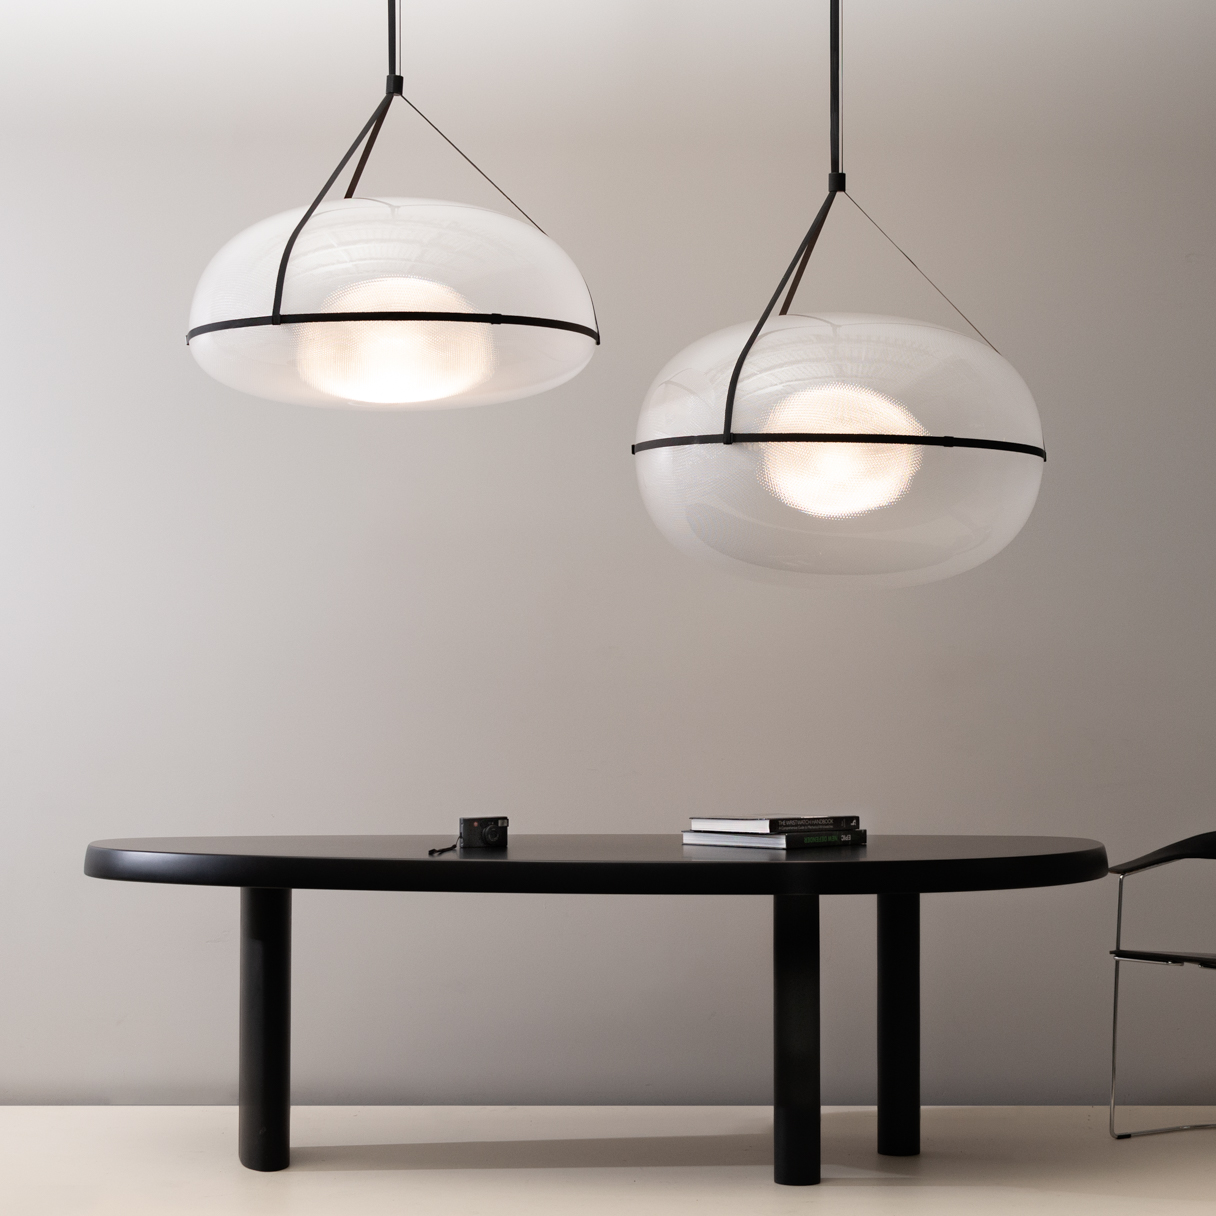 A-N-D decorative luminaire design studio and manufacturer in